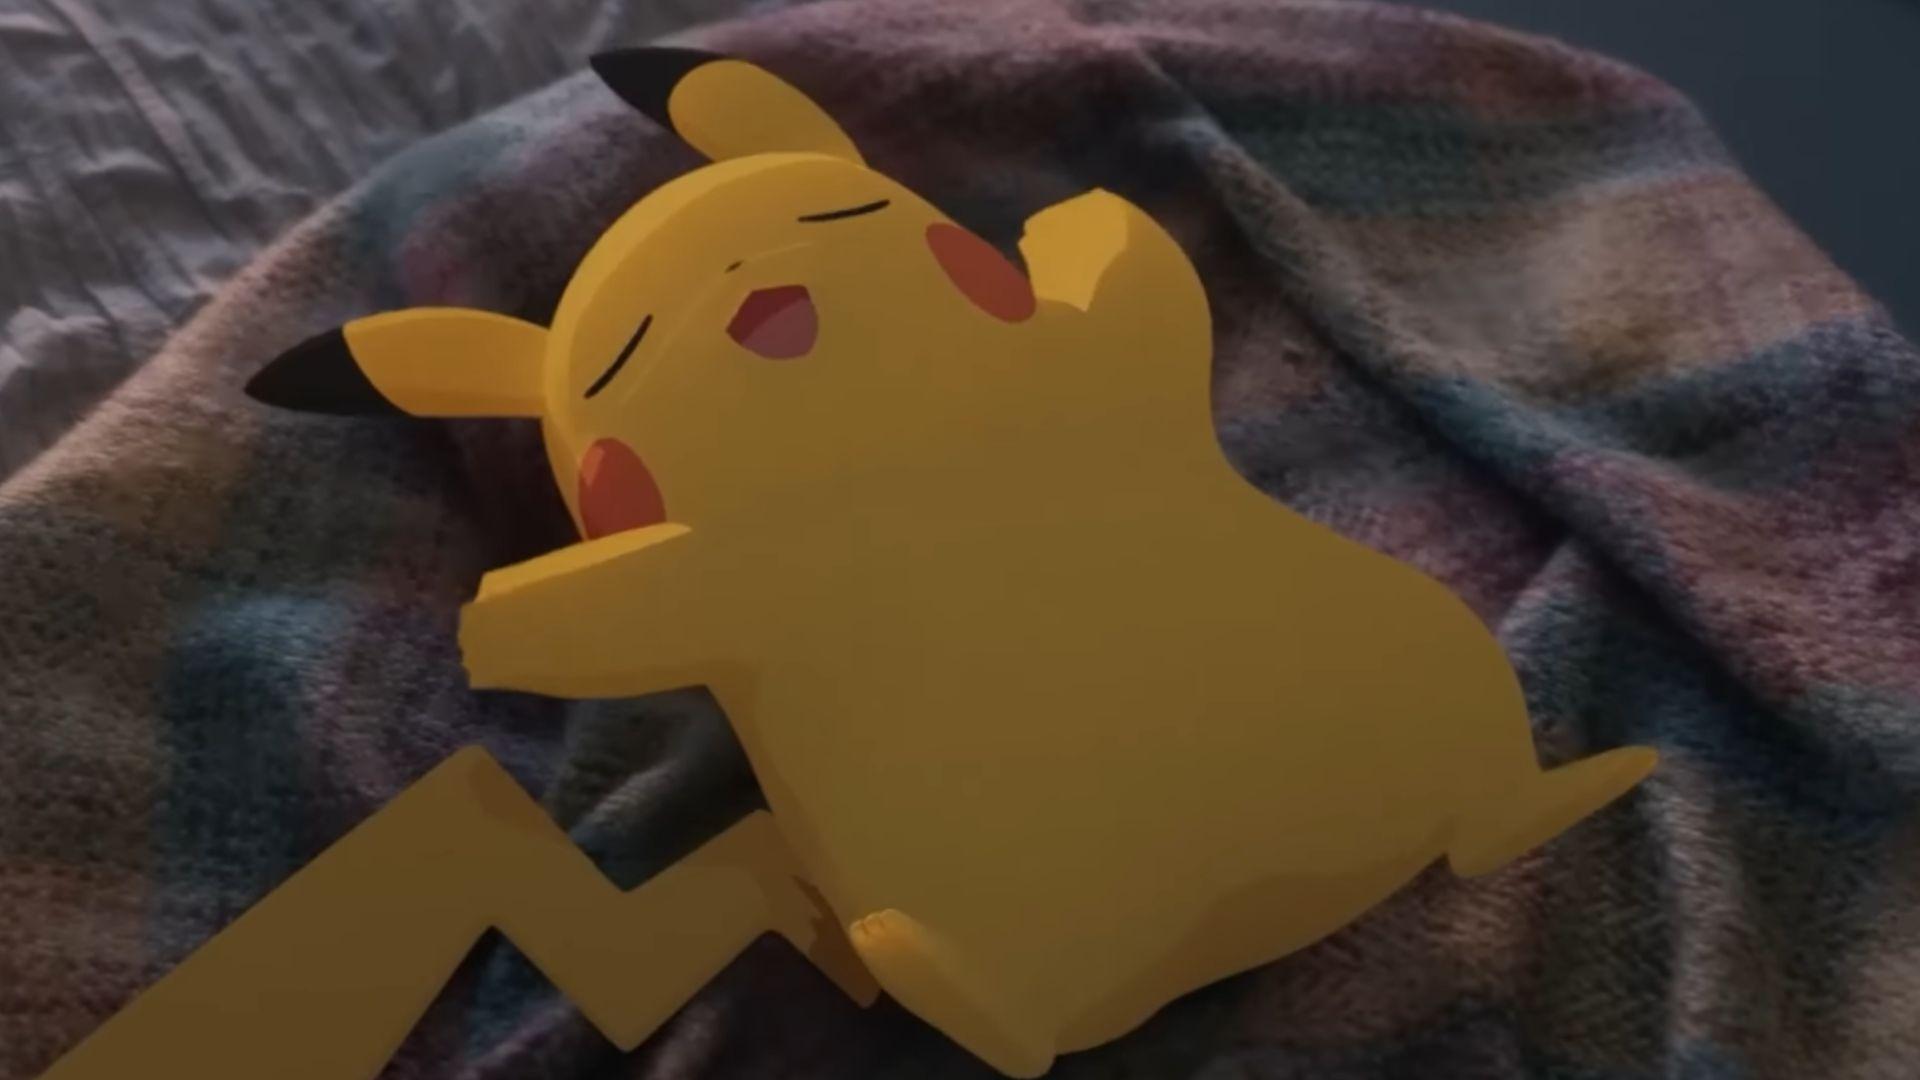 Pikachu sleeping